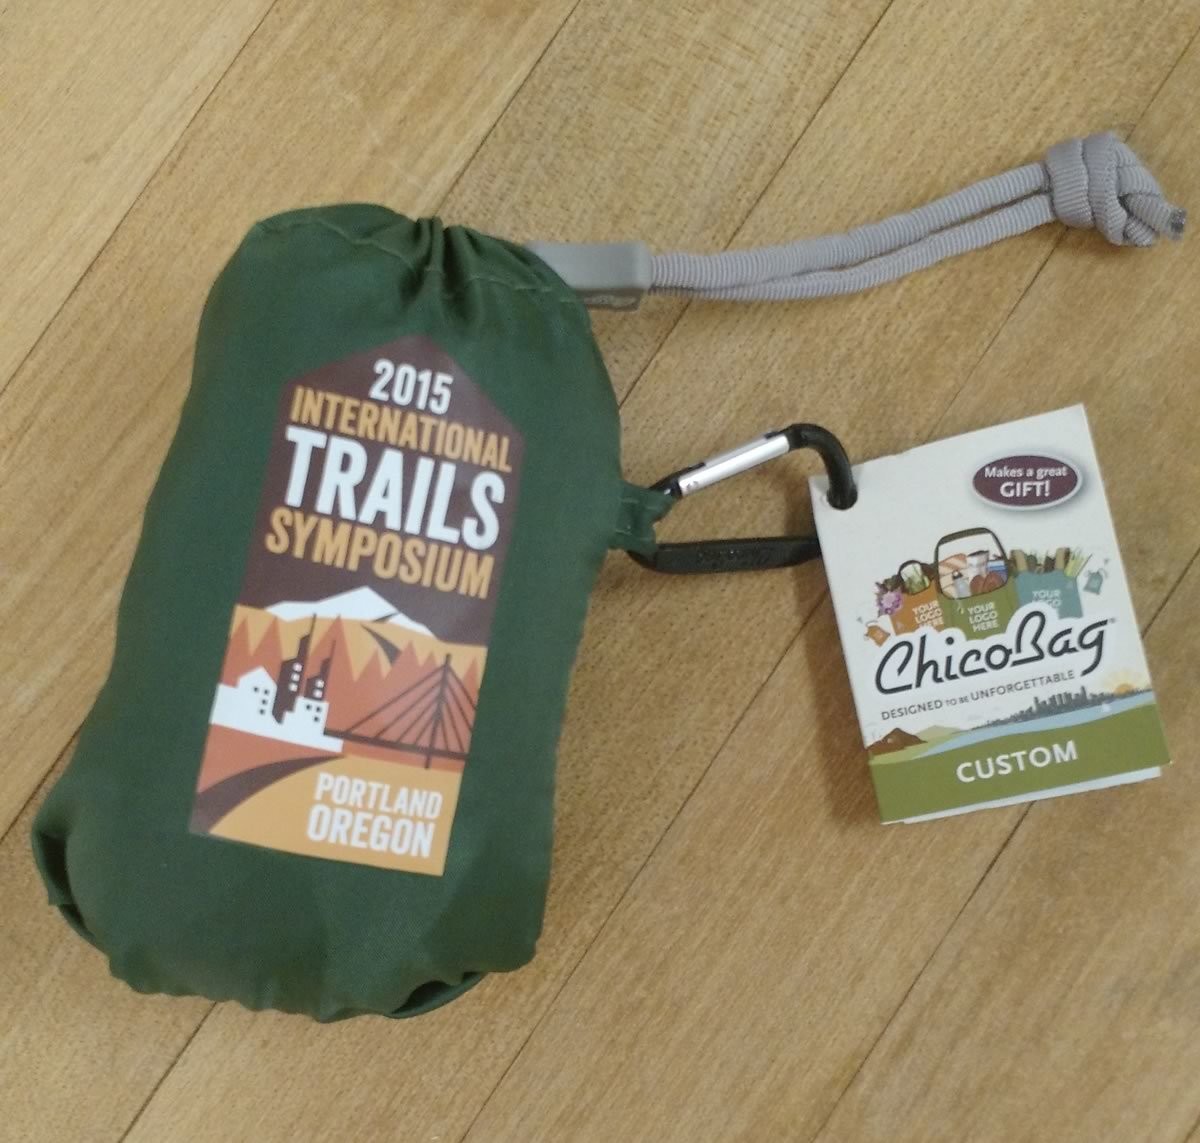 2015 International Trails Symposium ChicoBag